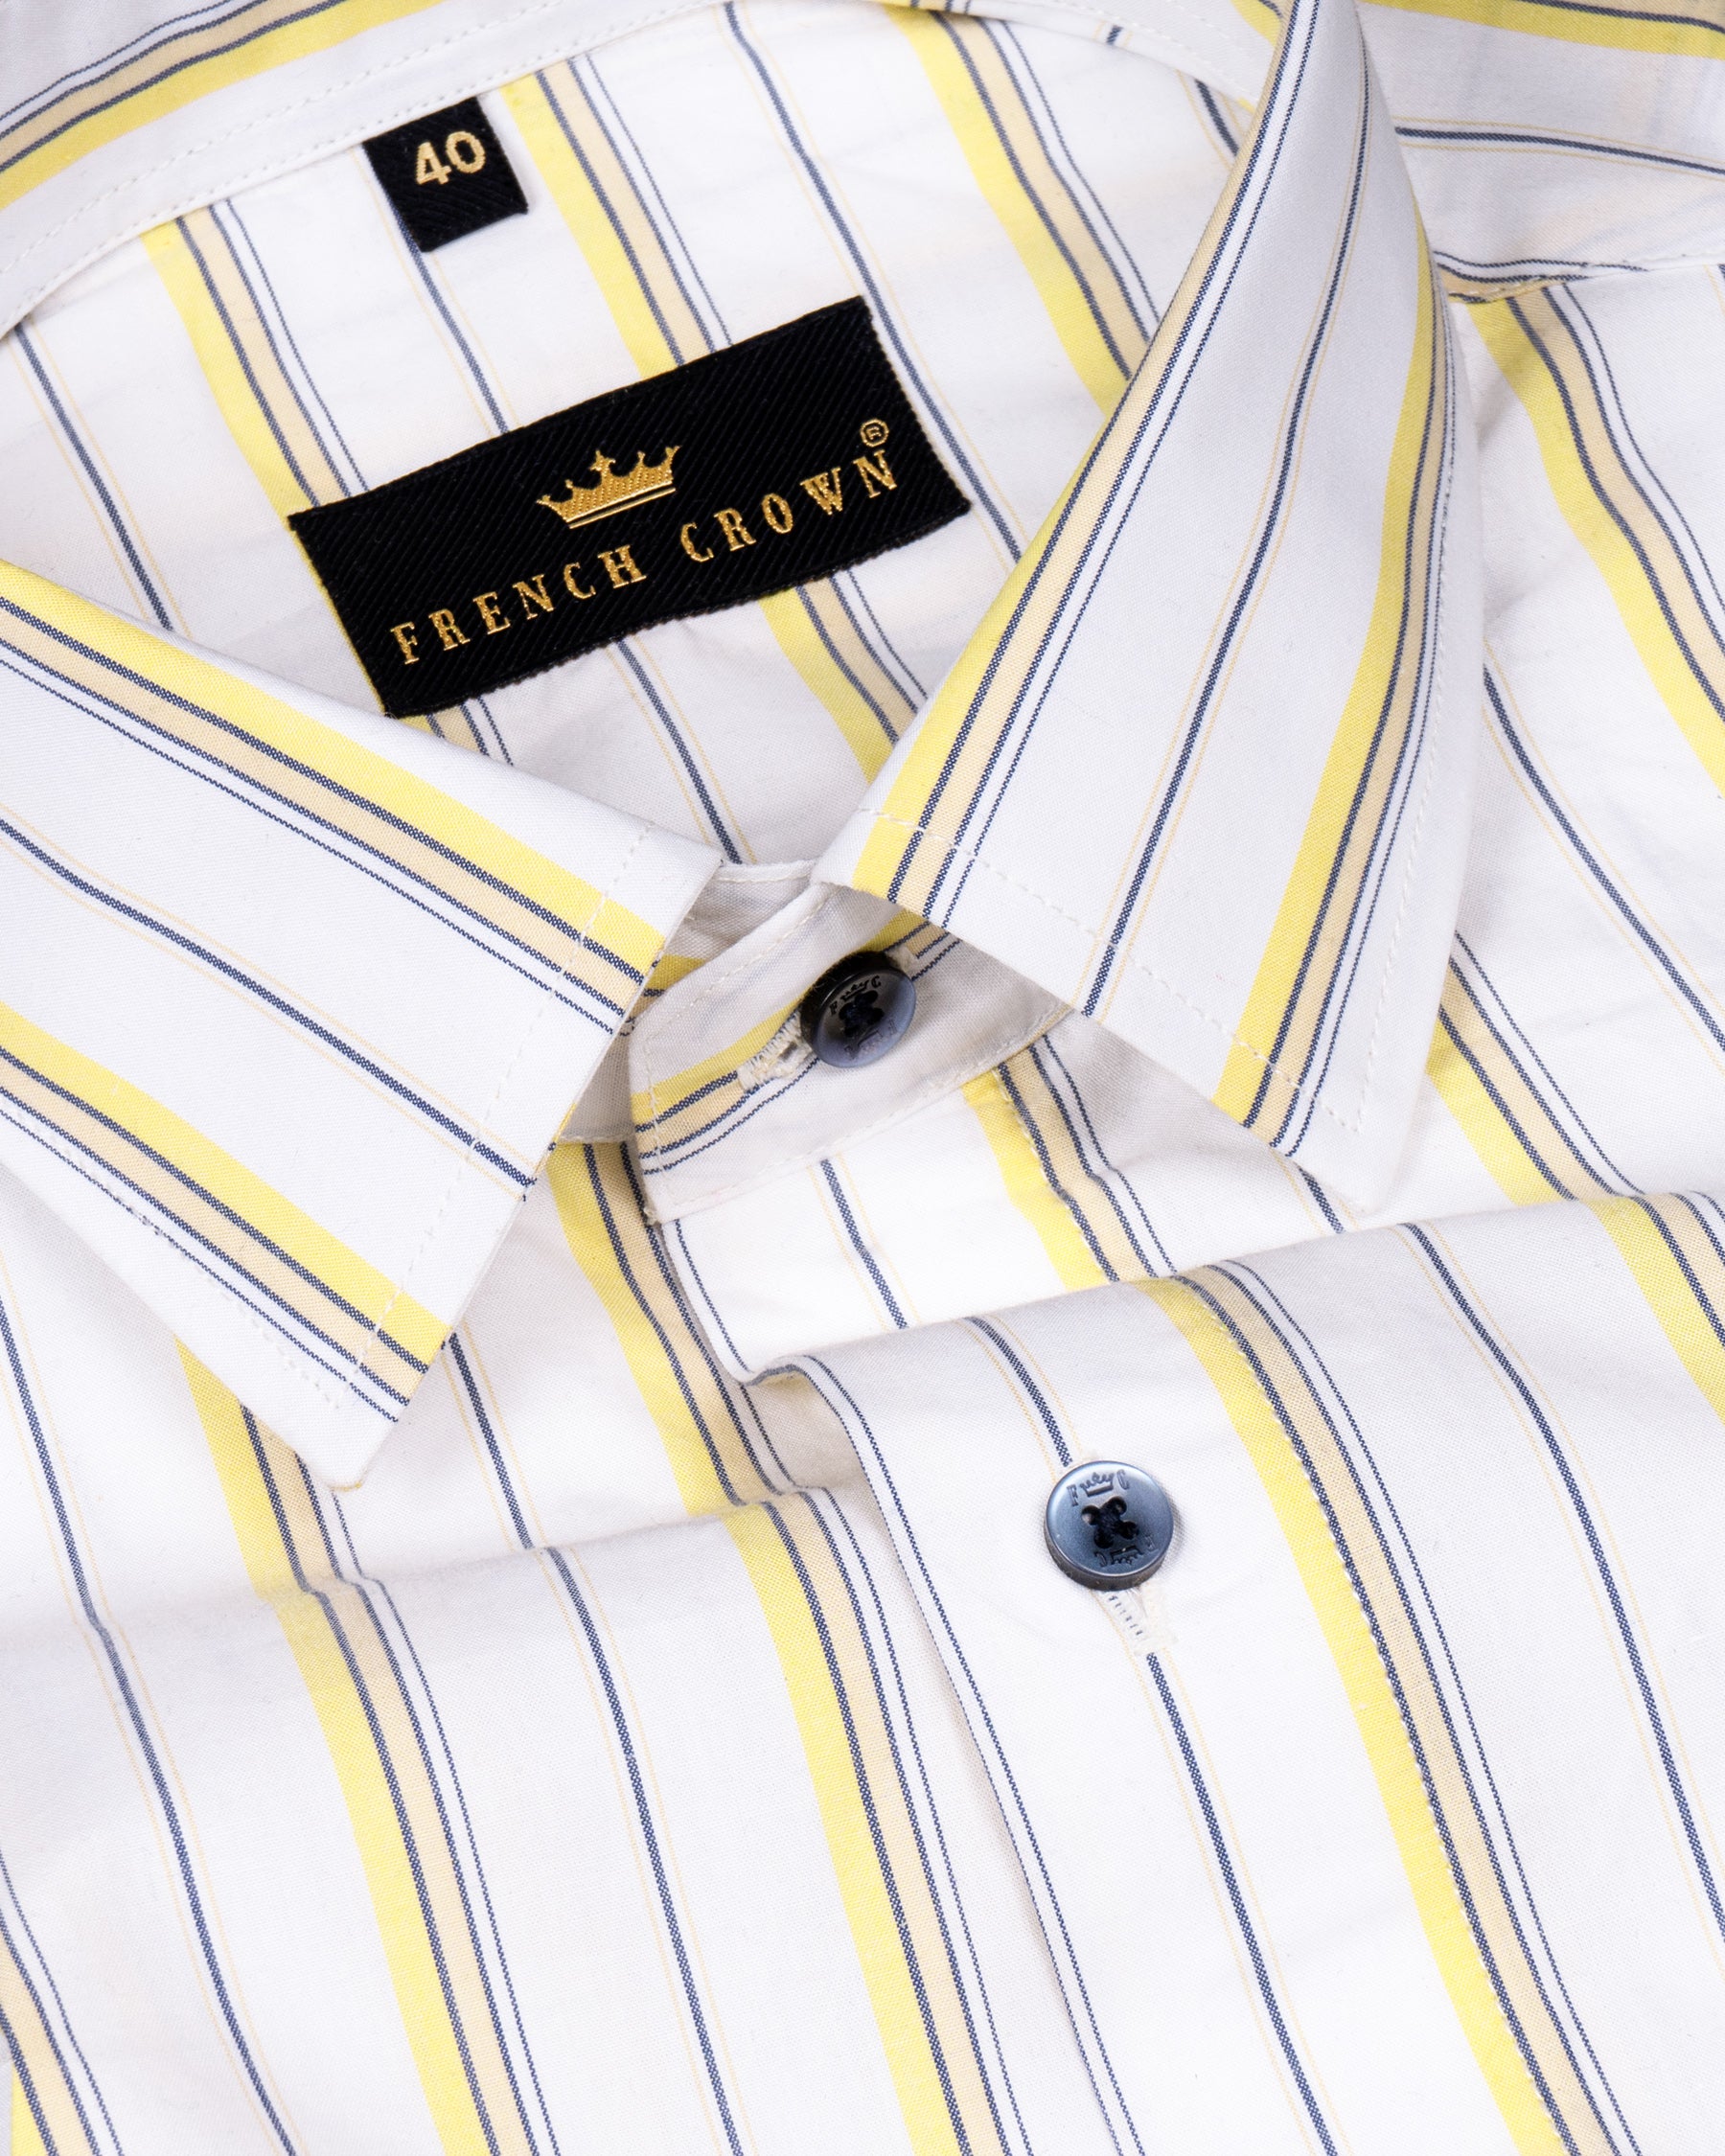 White Striped Premium Cotton Shirt 4601-BLE-38, 4601-BLE-H-38, 4601-BLE-39, 4601-BLE-H-39, 4601-BLE-40, 4601-BLE-H-40, 4601-BLE-42, 4601-BLE-H-42, 4601-BLE-44, 4601-BLE-H-44, 4601-BLE-H-46, 4601-BLE-48, 4601-BLE-H-48, 4601-BLE-50, 4601-BLE-H-50, 4601-BLE-52, 4601-BLE-H-52, 4601-BLE-46